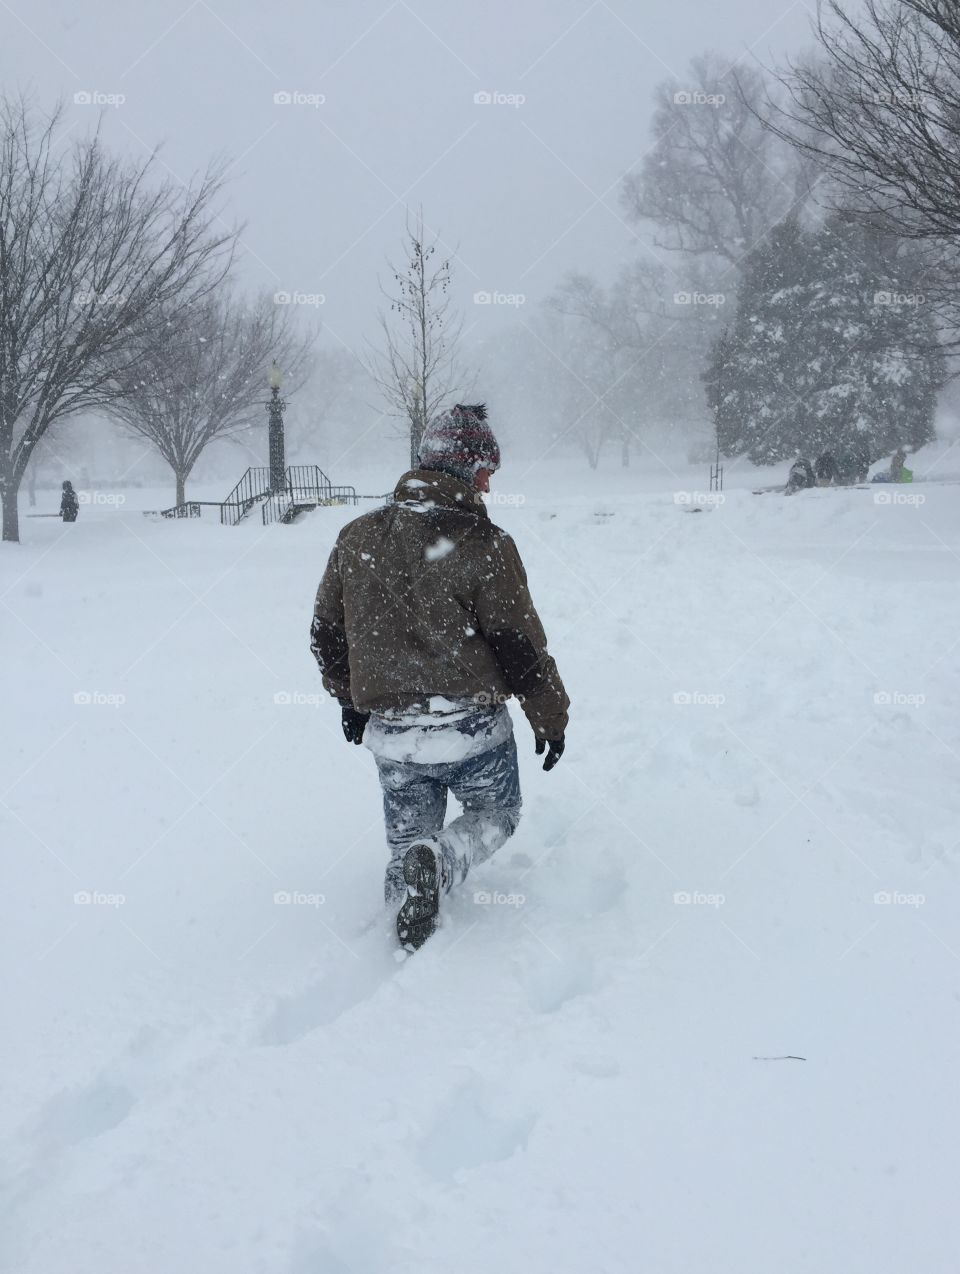 Walking in the snow - Washington, DC